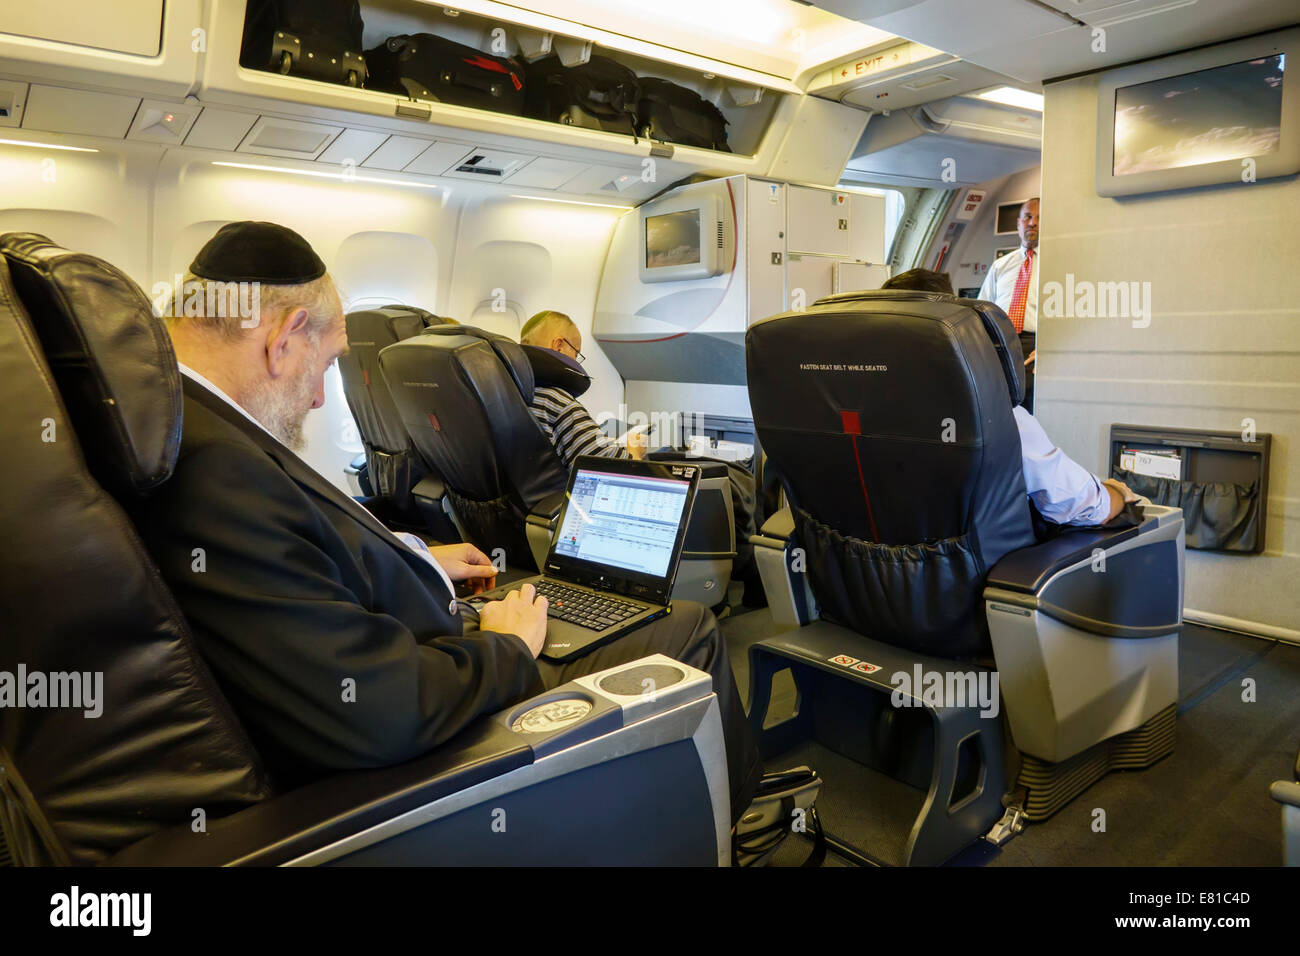 Miami Florida,International Airport,onboard,passenger cabin,American Airlines,class,seats,adult adults man men male,Jewish,wearing cap,yarmulke,kippah Stock Photo